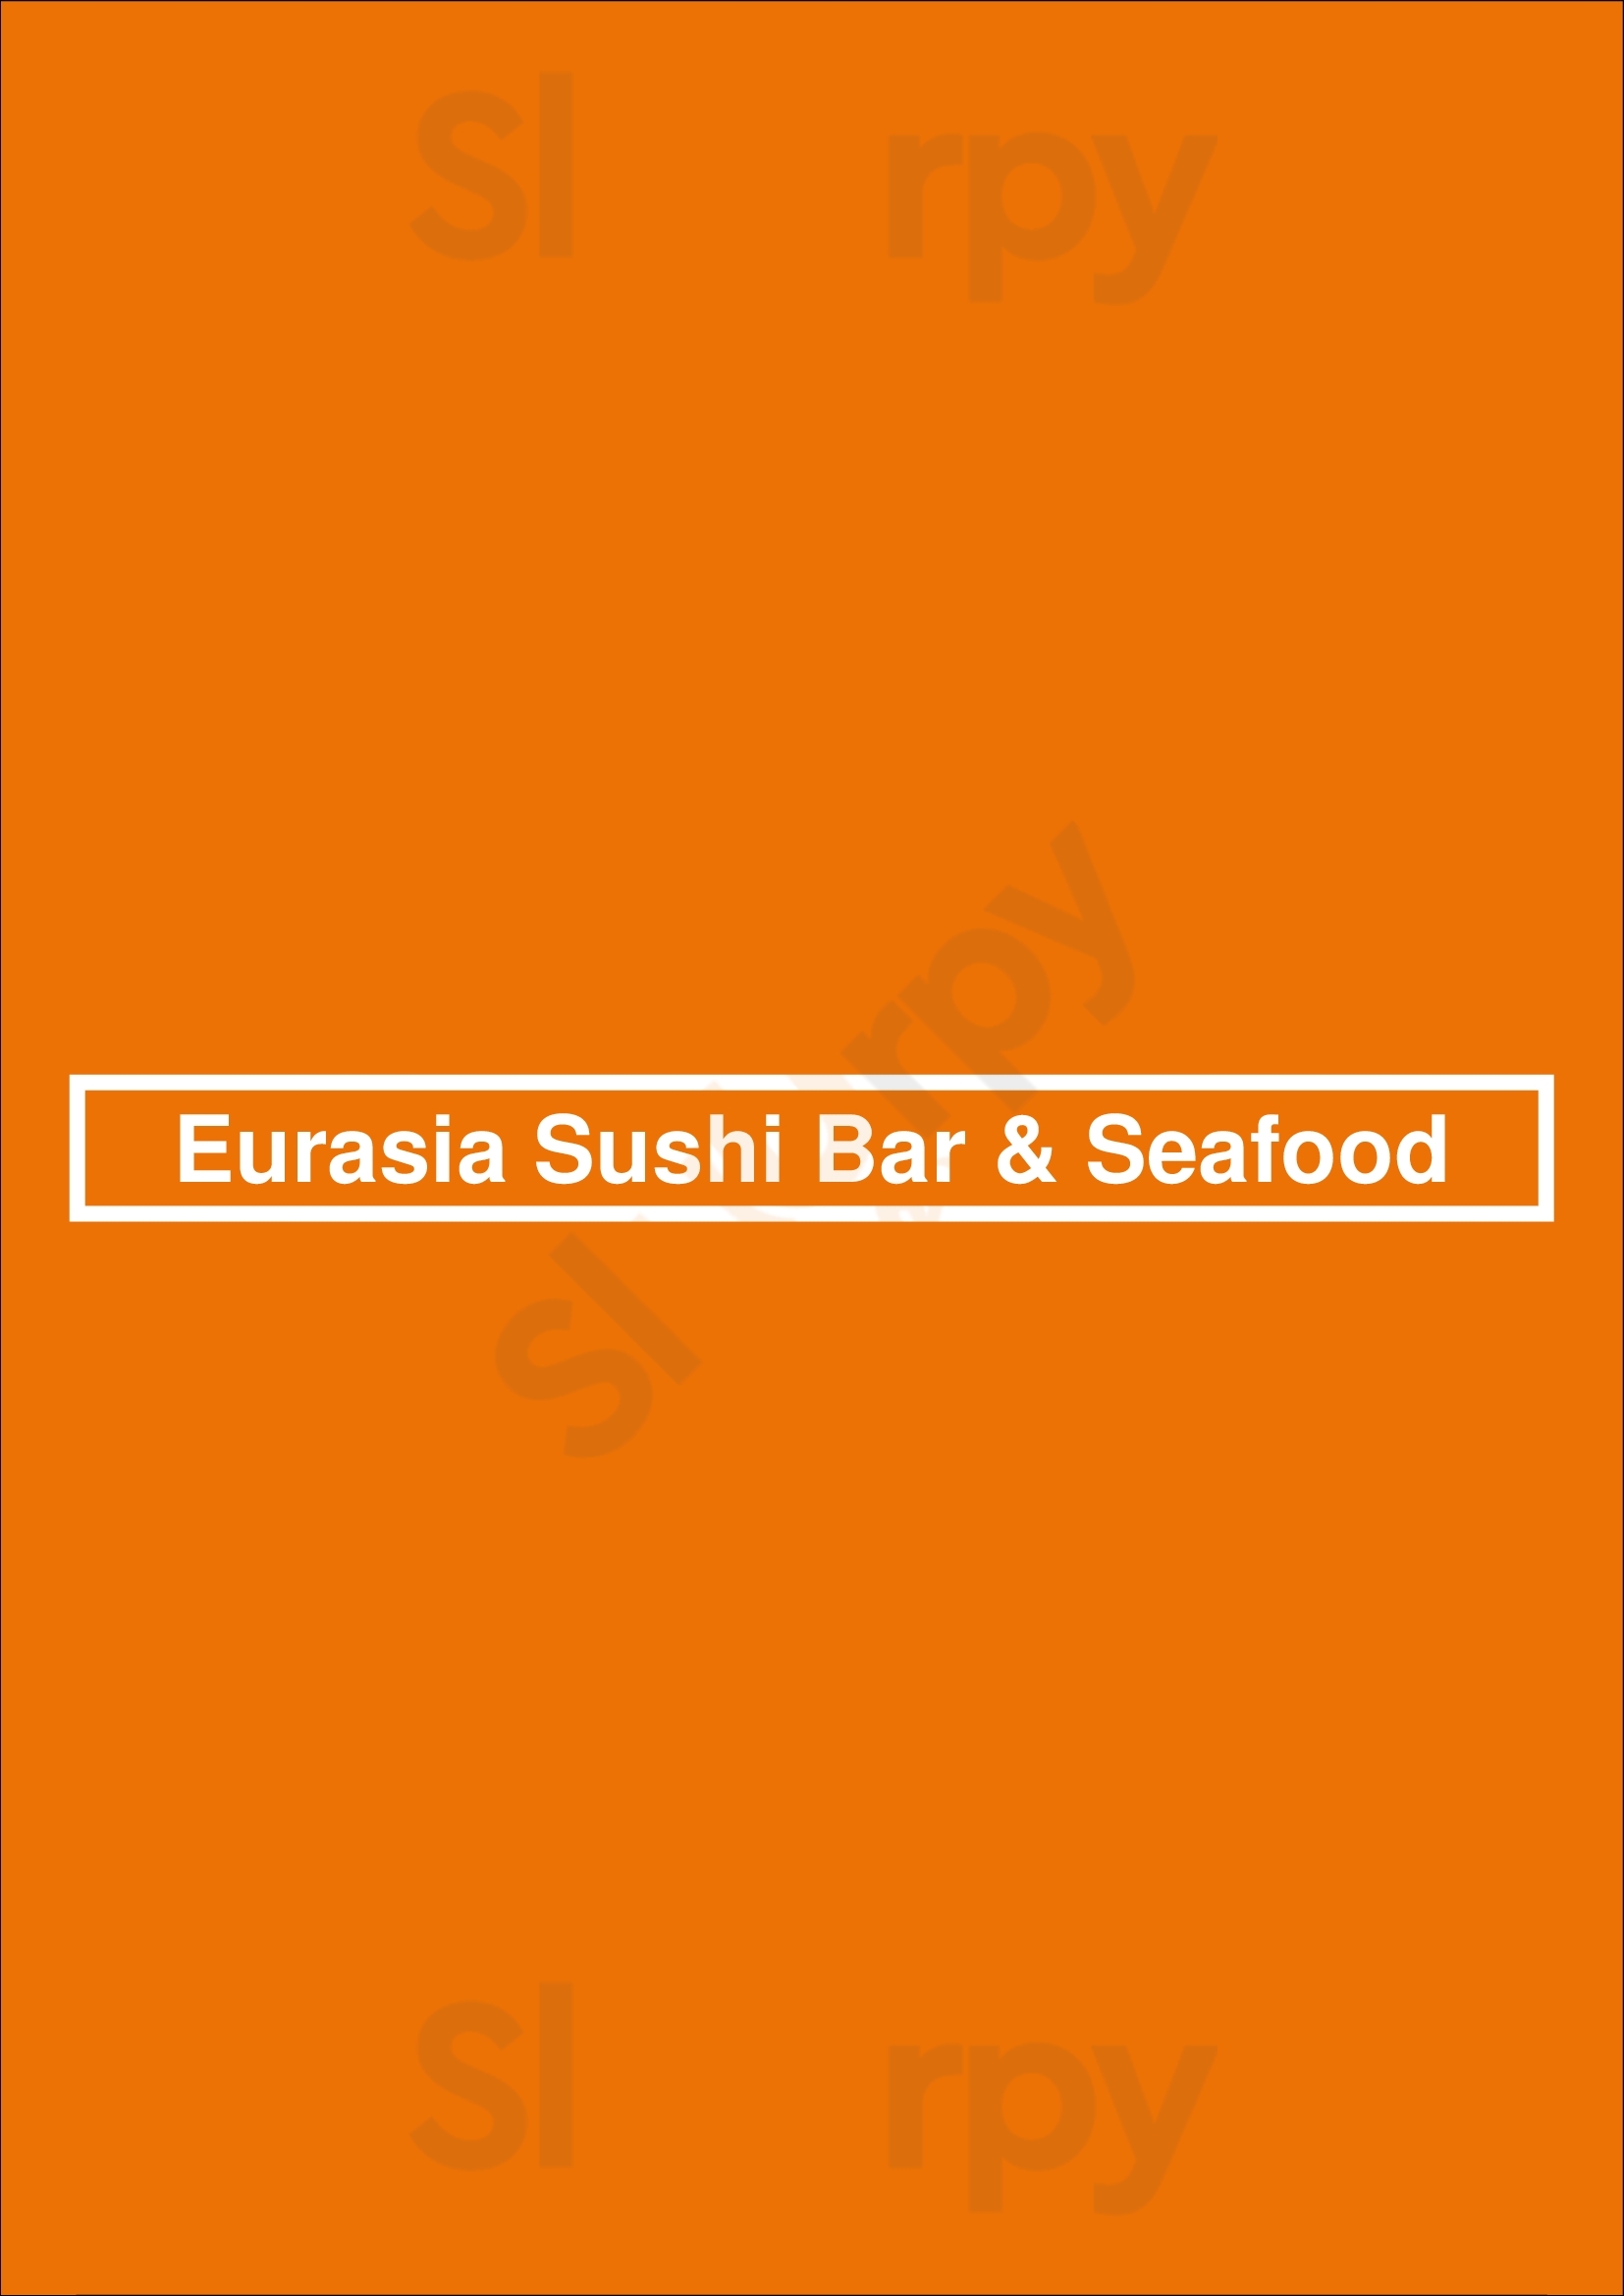 Eurasia Sushi Bar & Seafood Austin Menu - 1